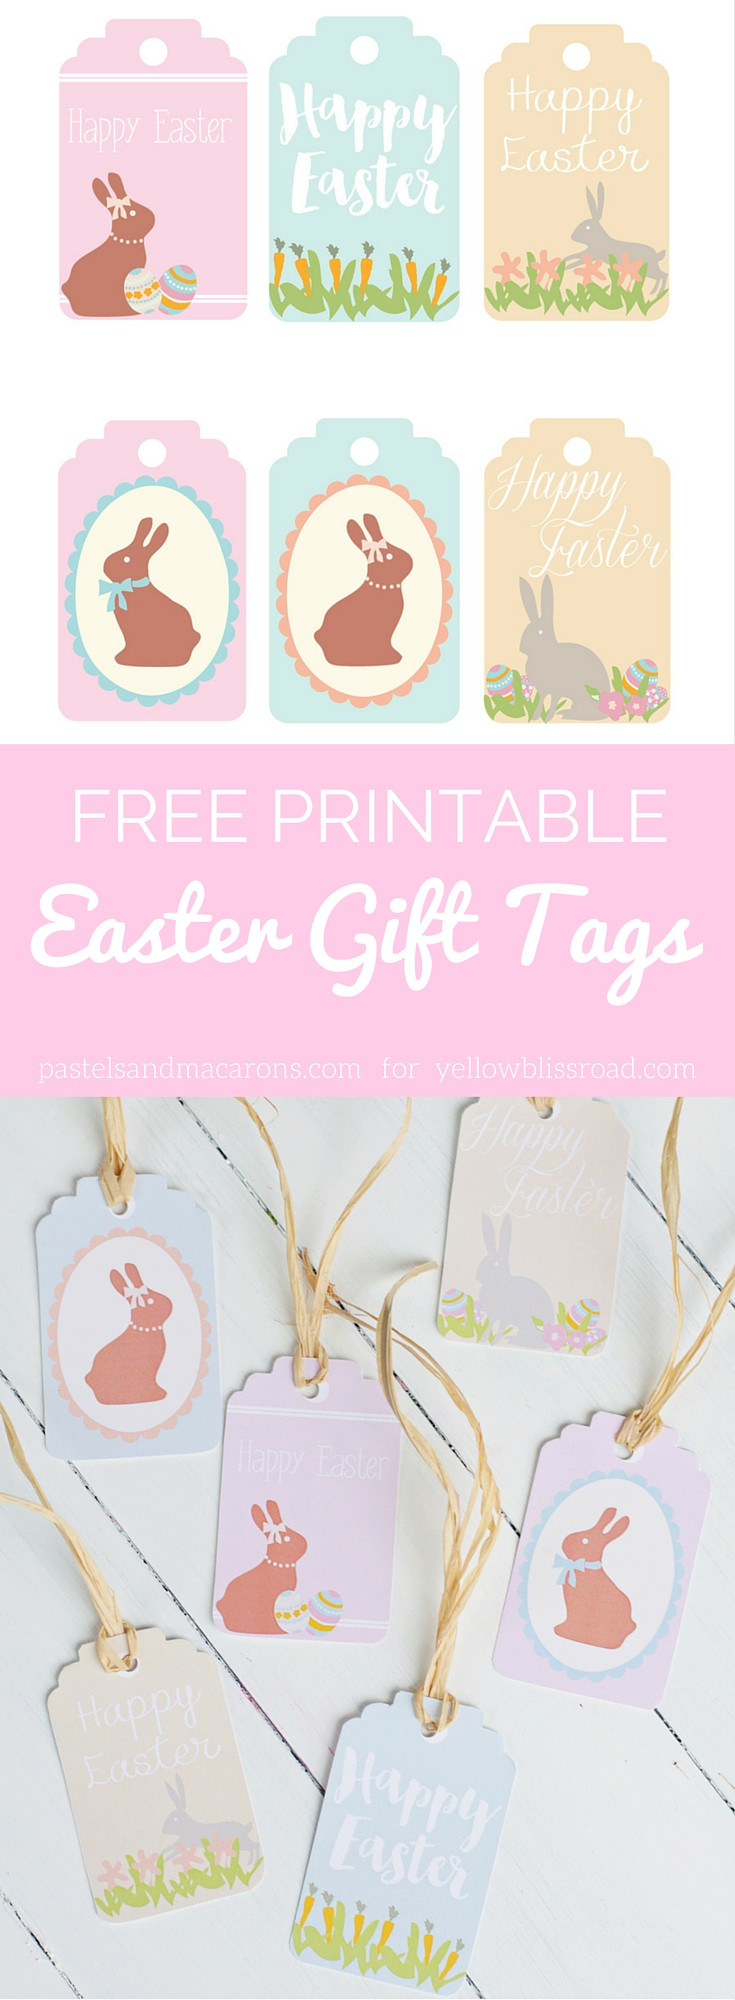 Free Printable Easter Gift Tags
 Free Printable Easter Gift Tags